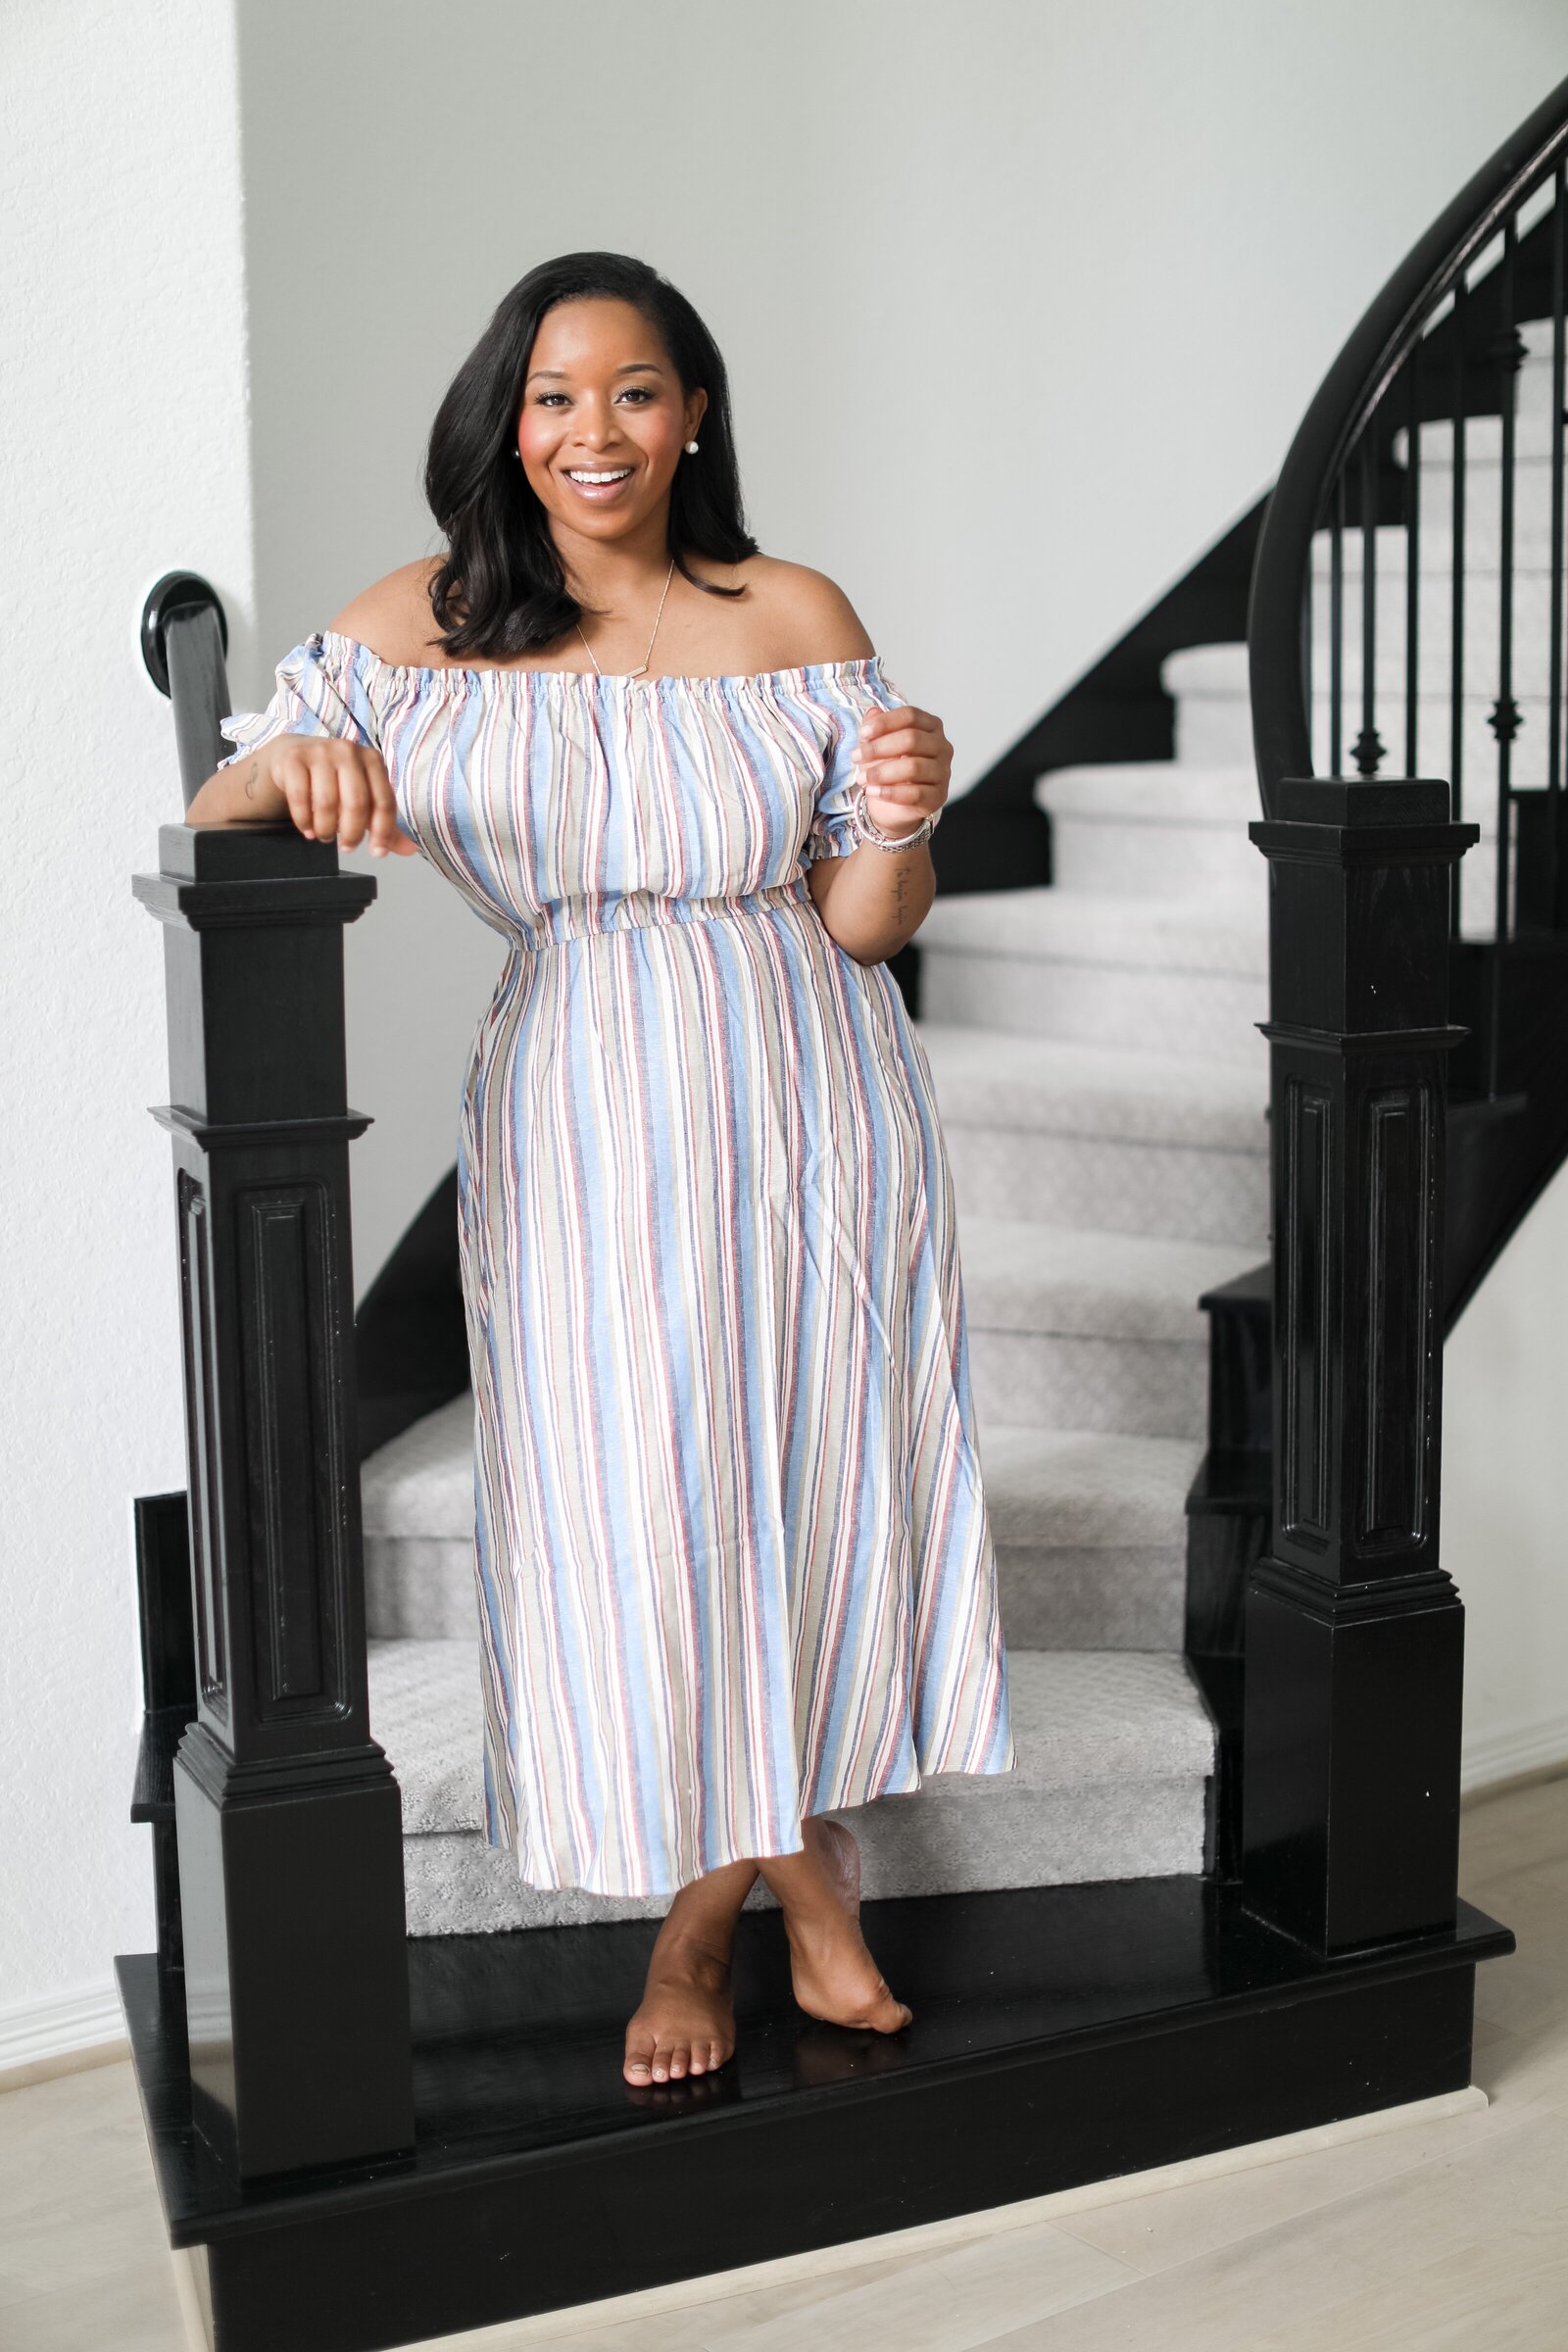 Carmen Renee - Houston Texas Lifestyle Beauty Style Decor Motherhood Blogger - 19